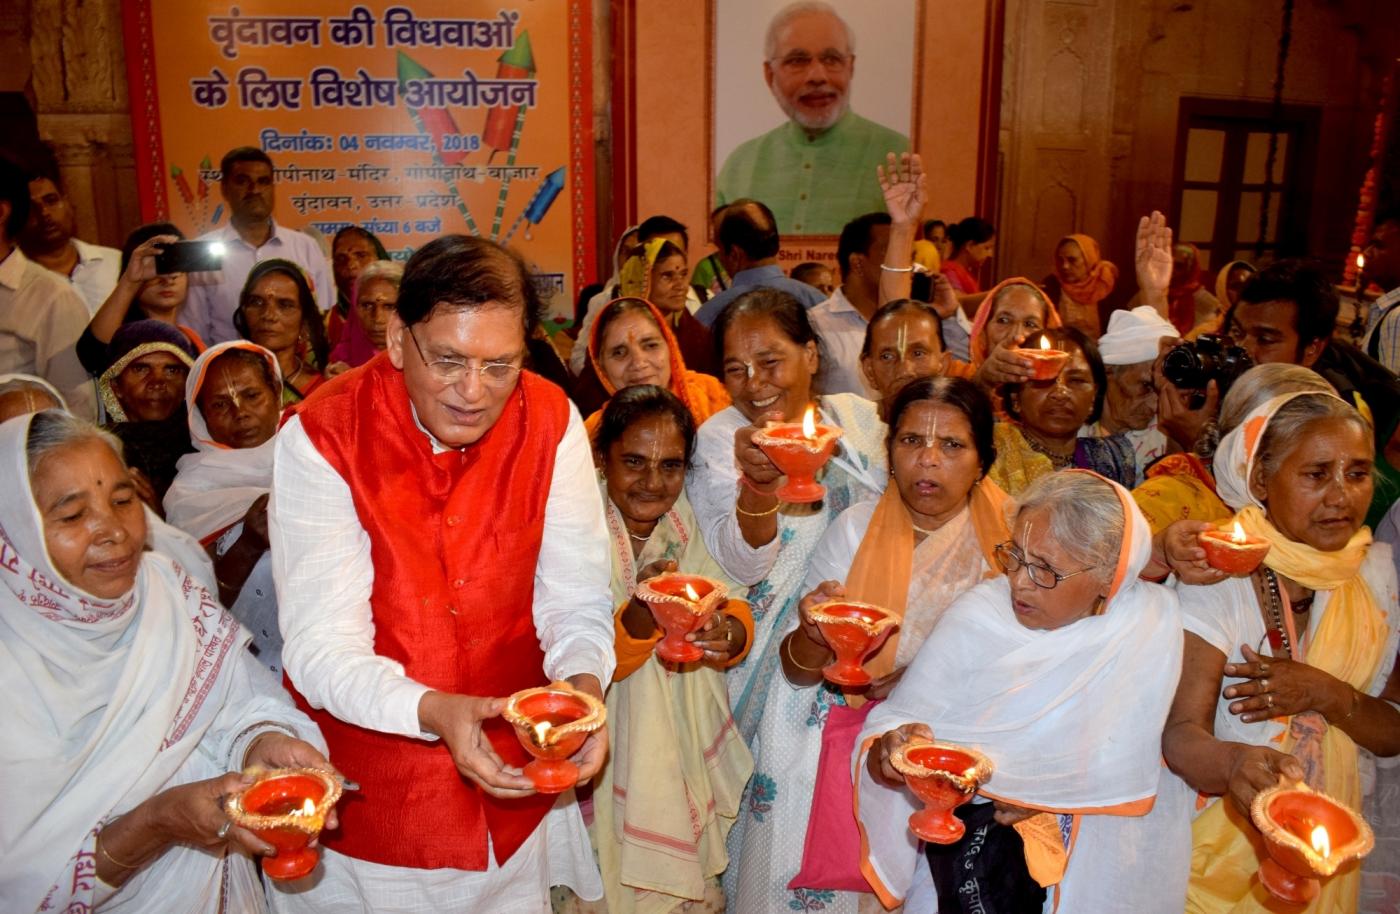 Vrindavan: Sulabh International Founder Bindeshwar Pathak with widows during a programme organised to celebrate Diwali, at Gopinath temple in Vrindavan, Uttar Pradesh on Nov 4, 2018. (Photo: IANS) by .